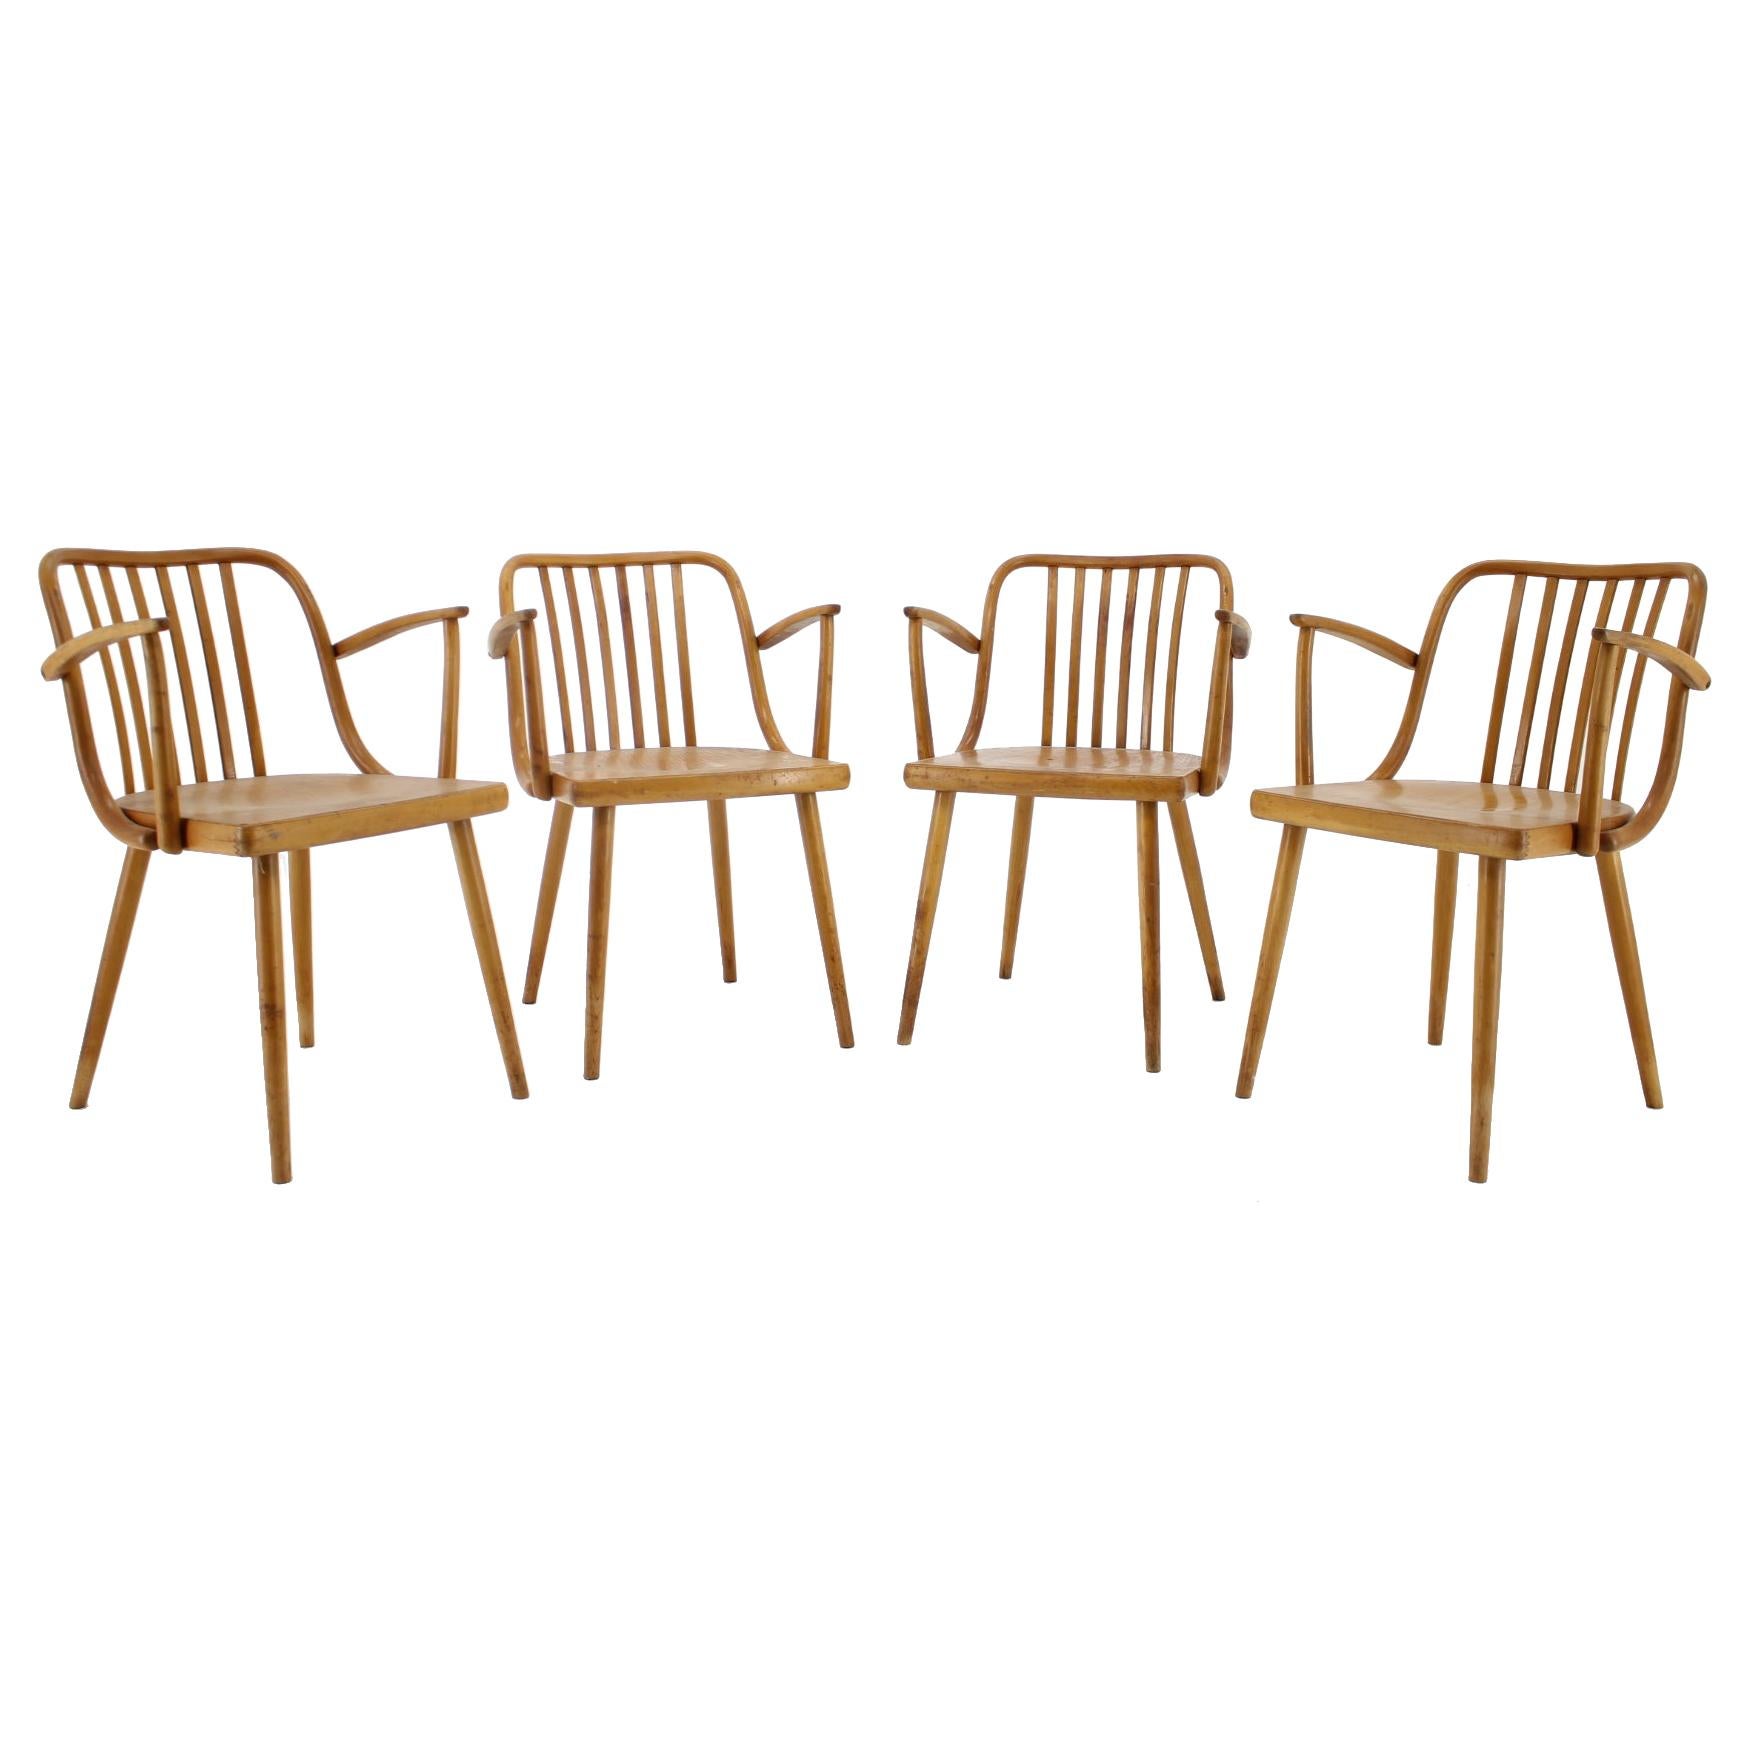 1960s Set of Four Antonin Suman Dining Chairs, Czechoslovakia